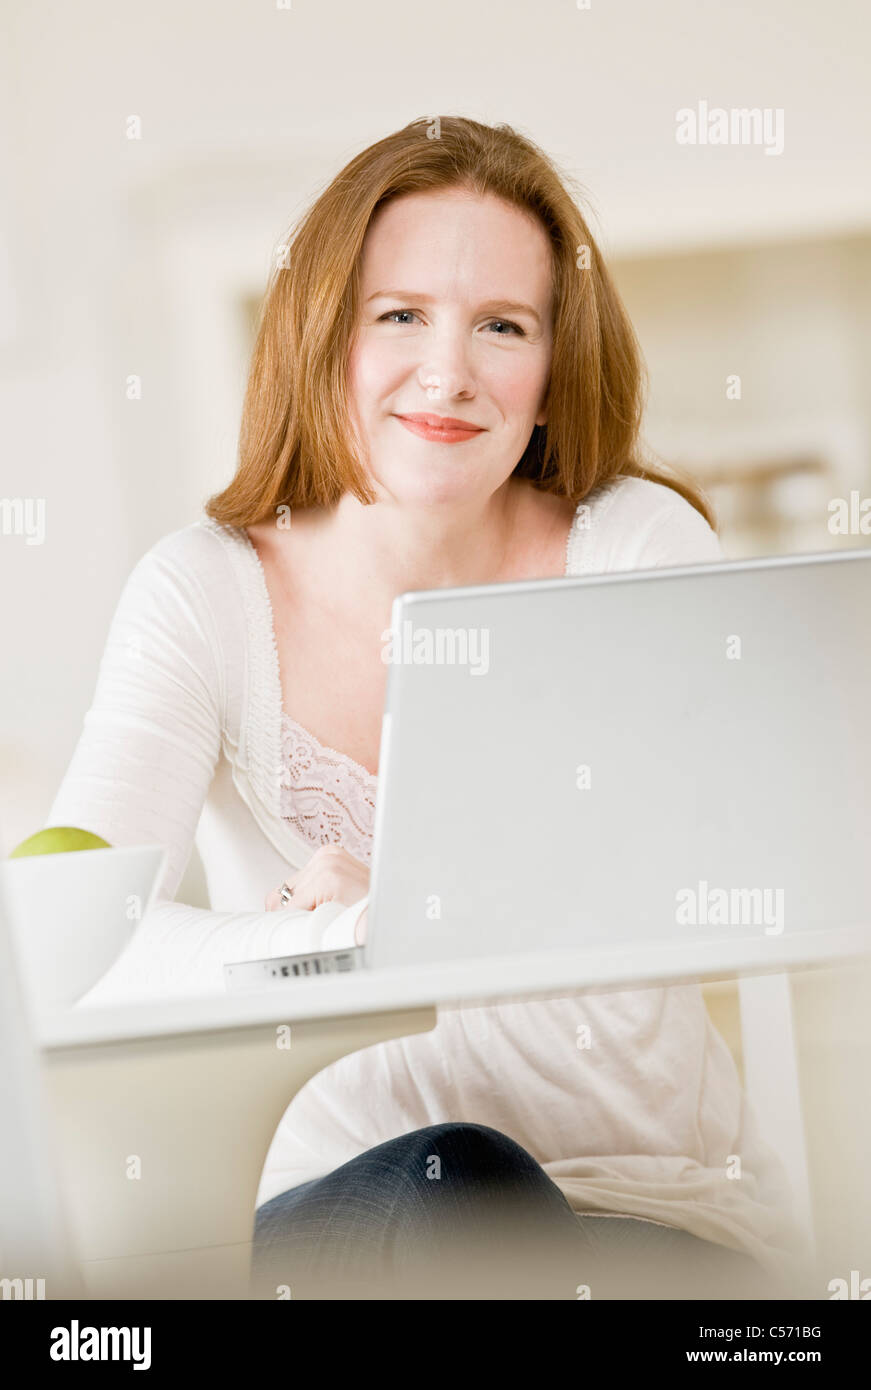 Smiling woman using laptop Banque D'Images